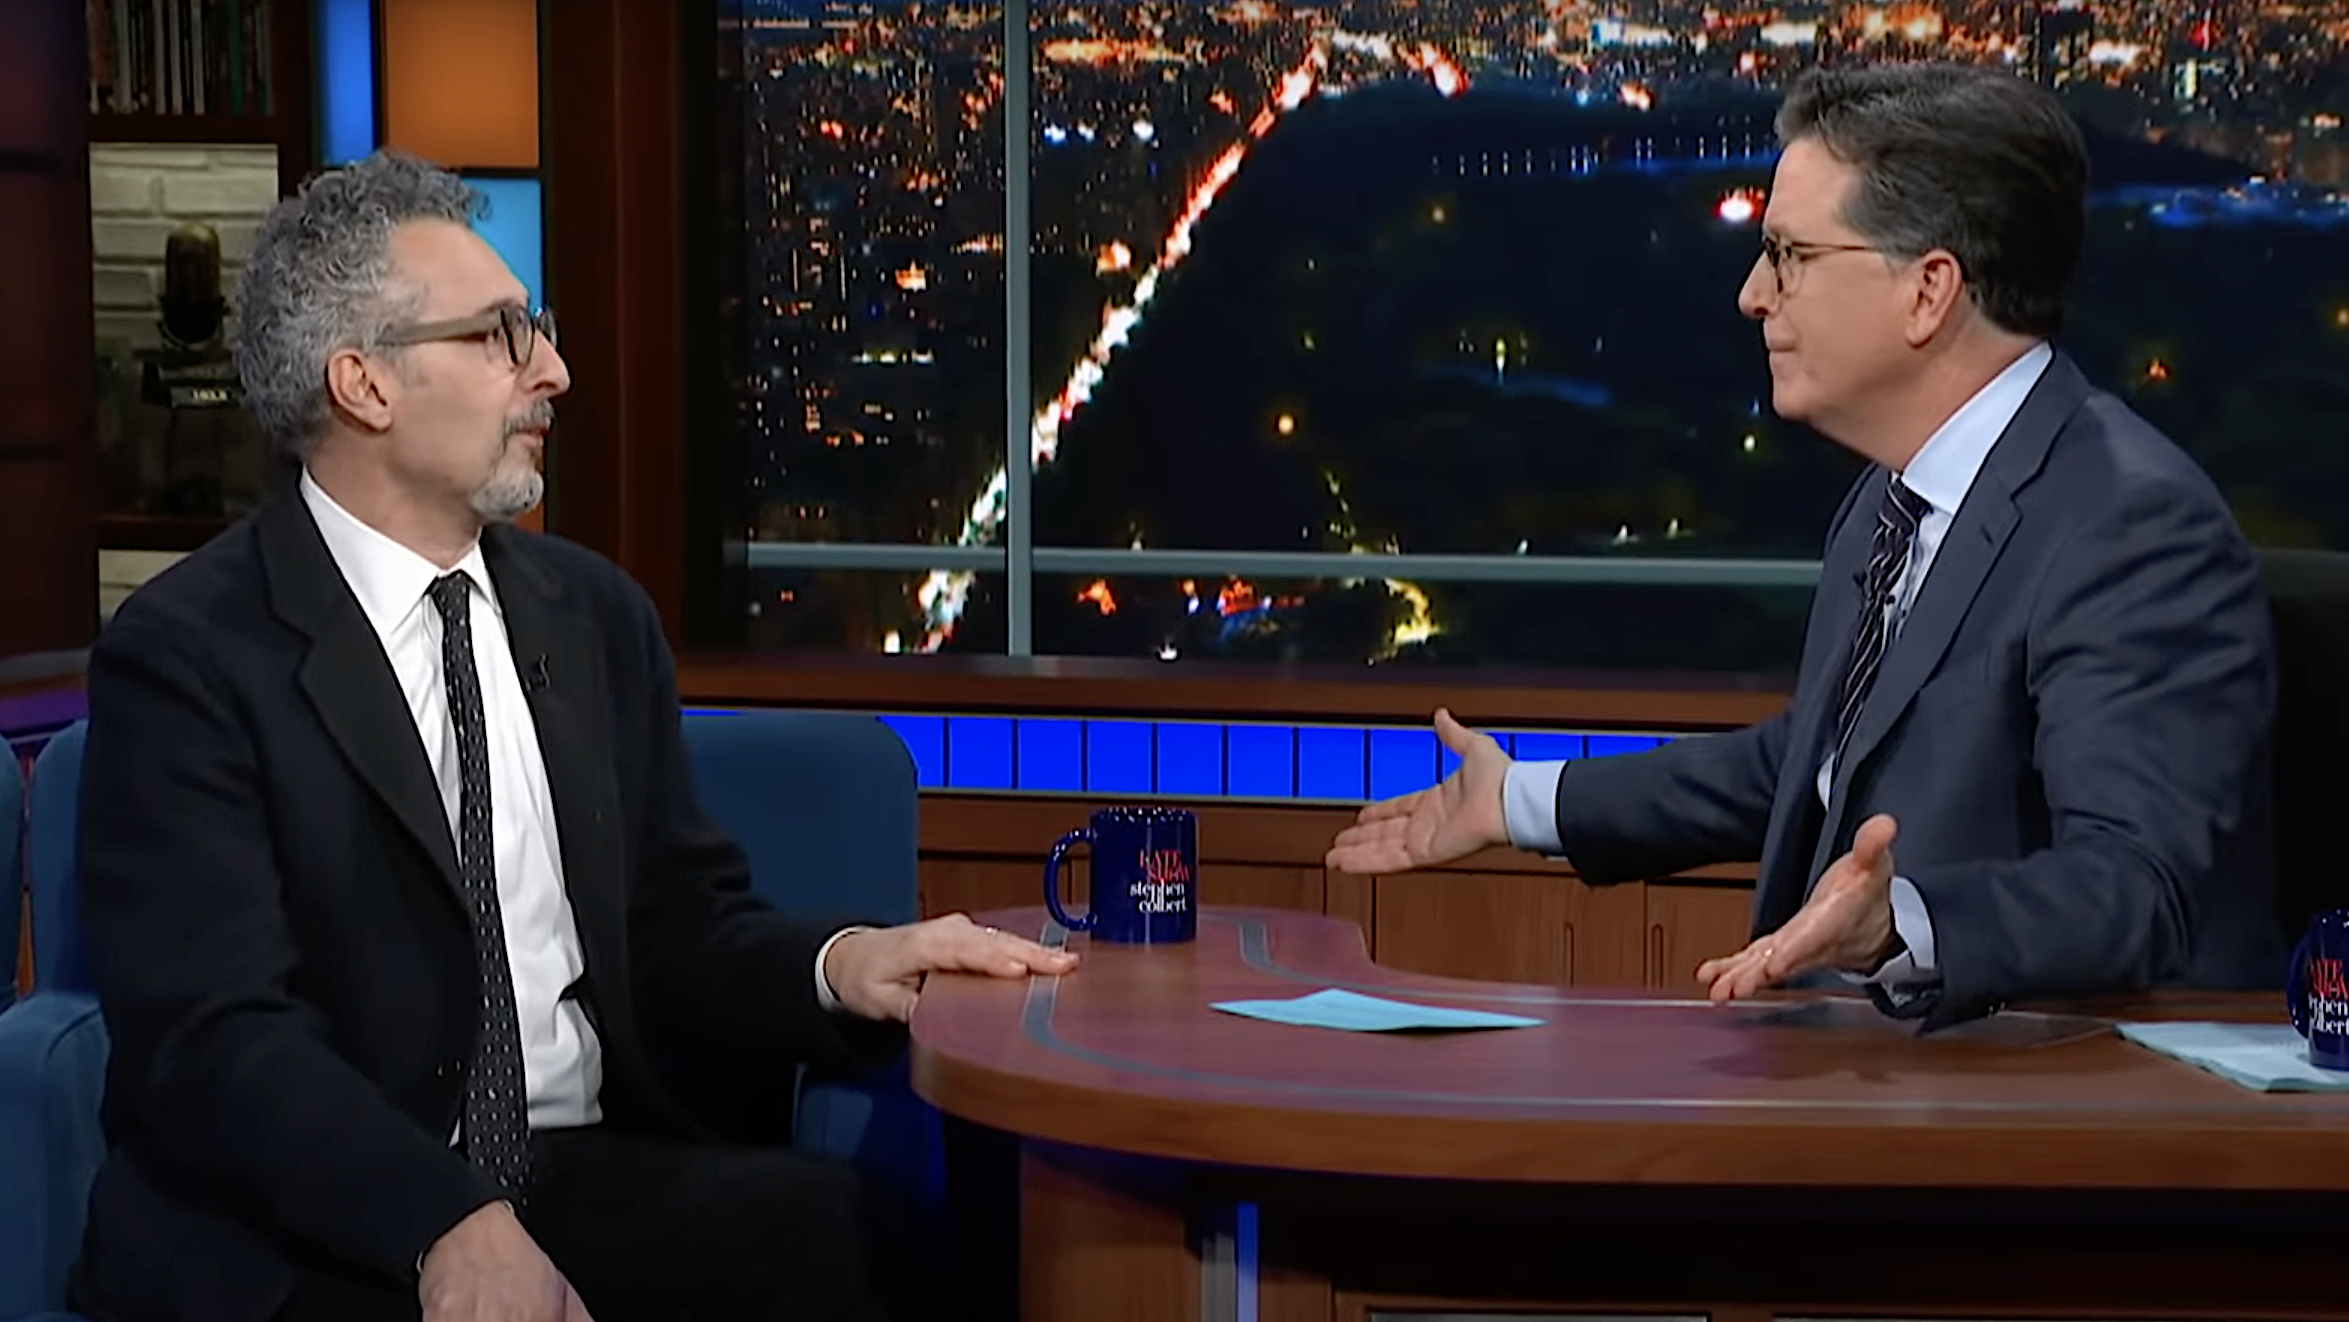 John Turturro workshops a Stephen Colbert-starring Double Indemnity remake